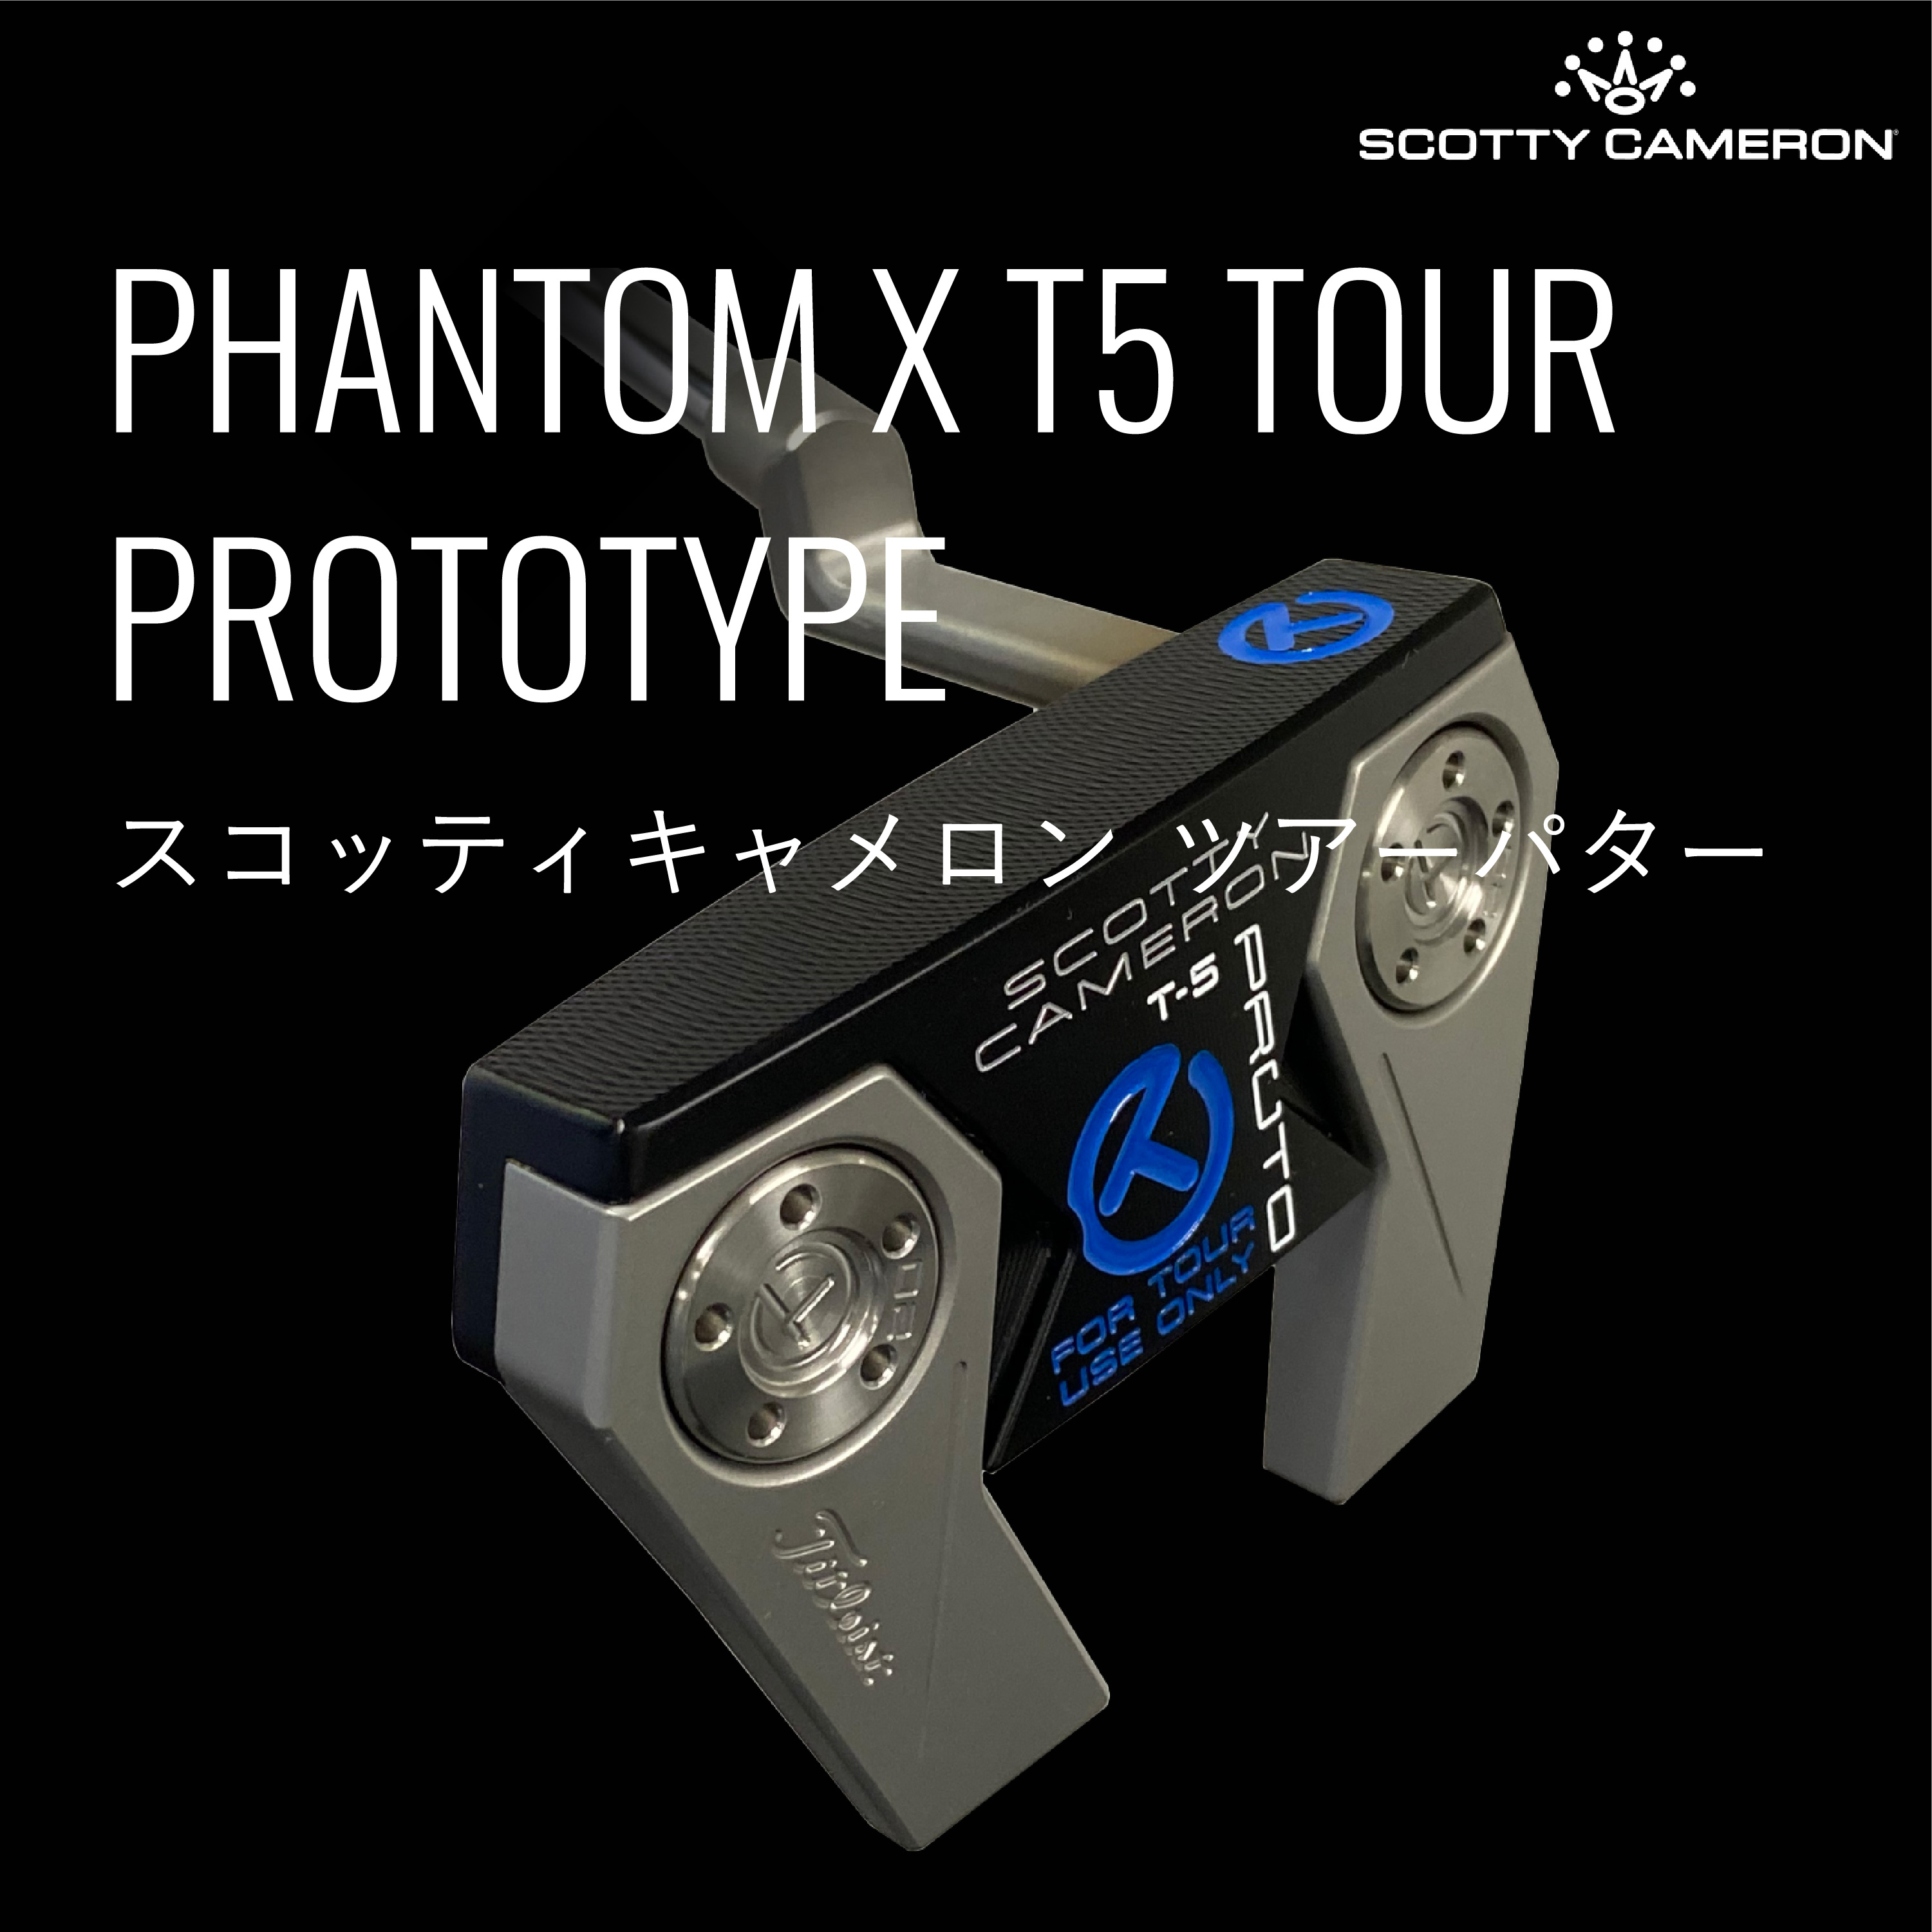 Scotty Cameron PHANTOM X T5 TOUR PROTOTYPE